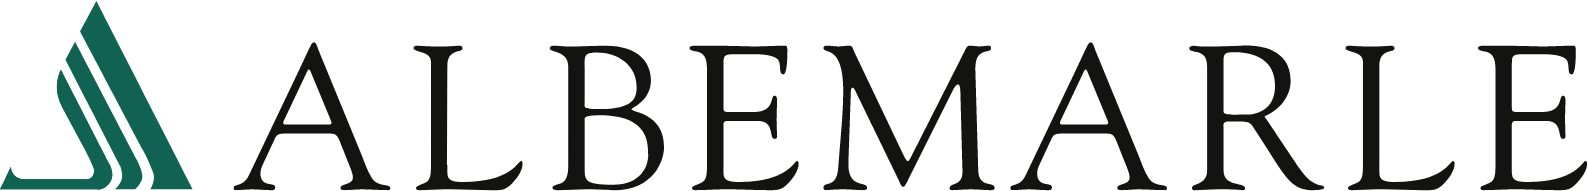 Albemarle logo large (transparent PNG)